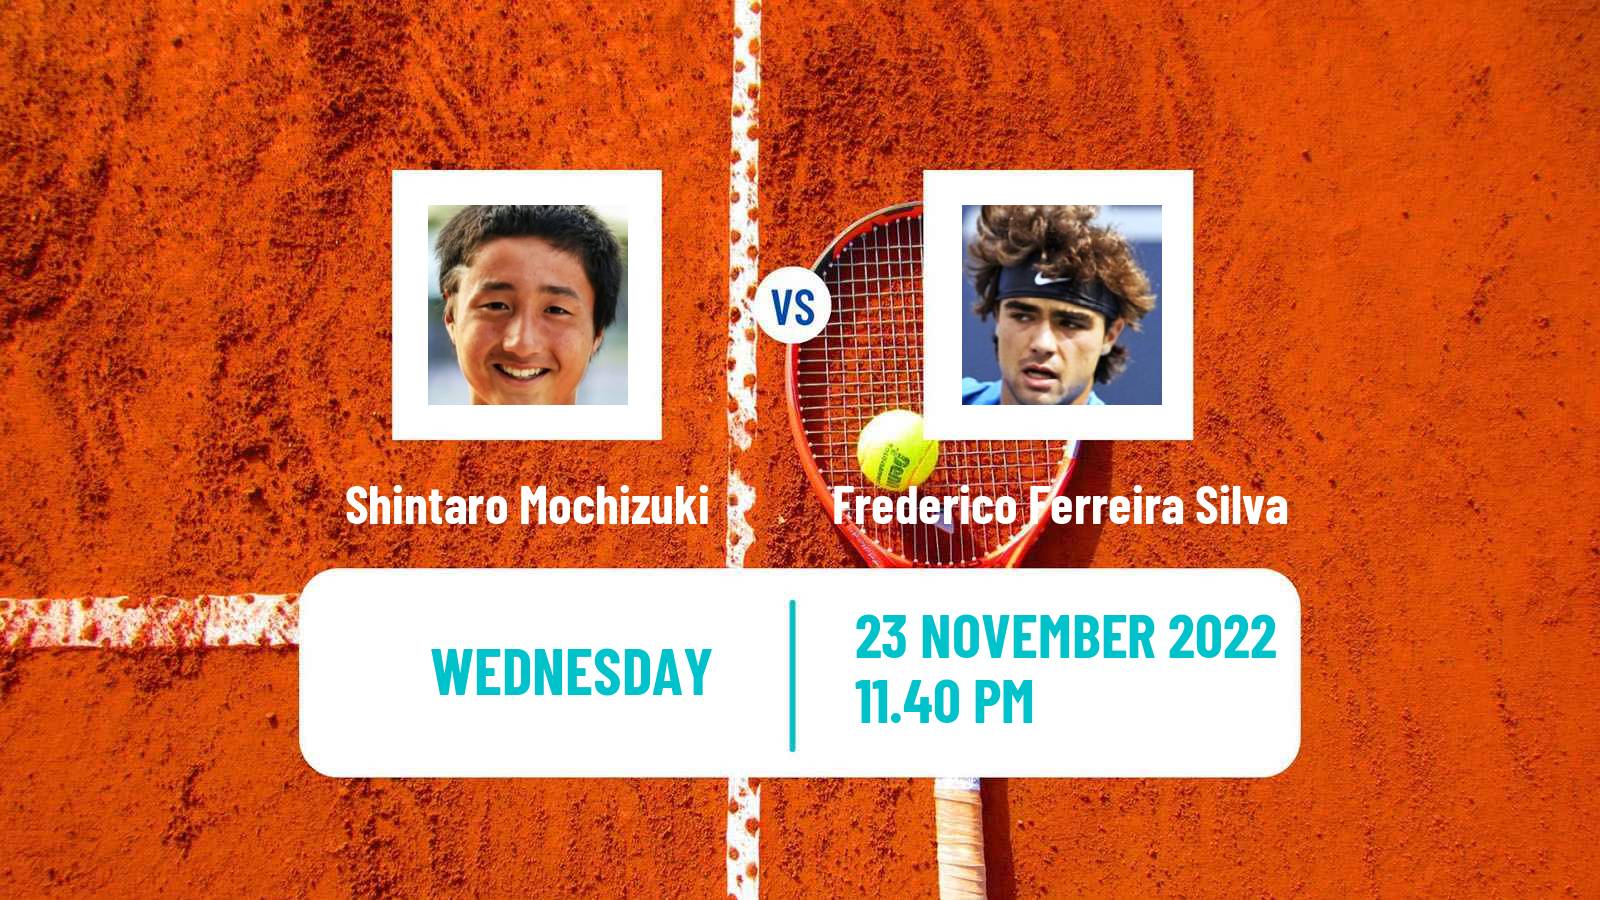 Tennis ATP Challenger Shintaro Mochizuki - Frederico Ferreira Silva